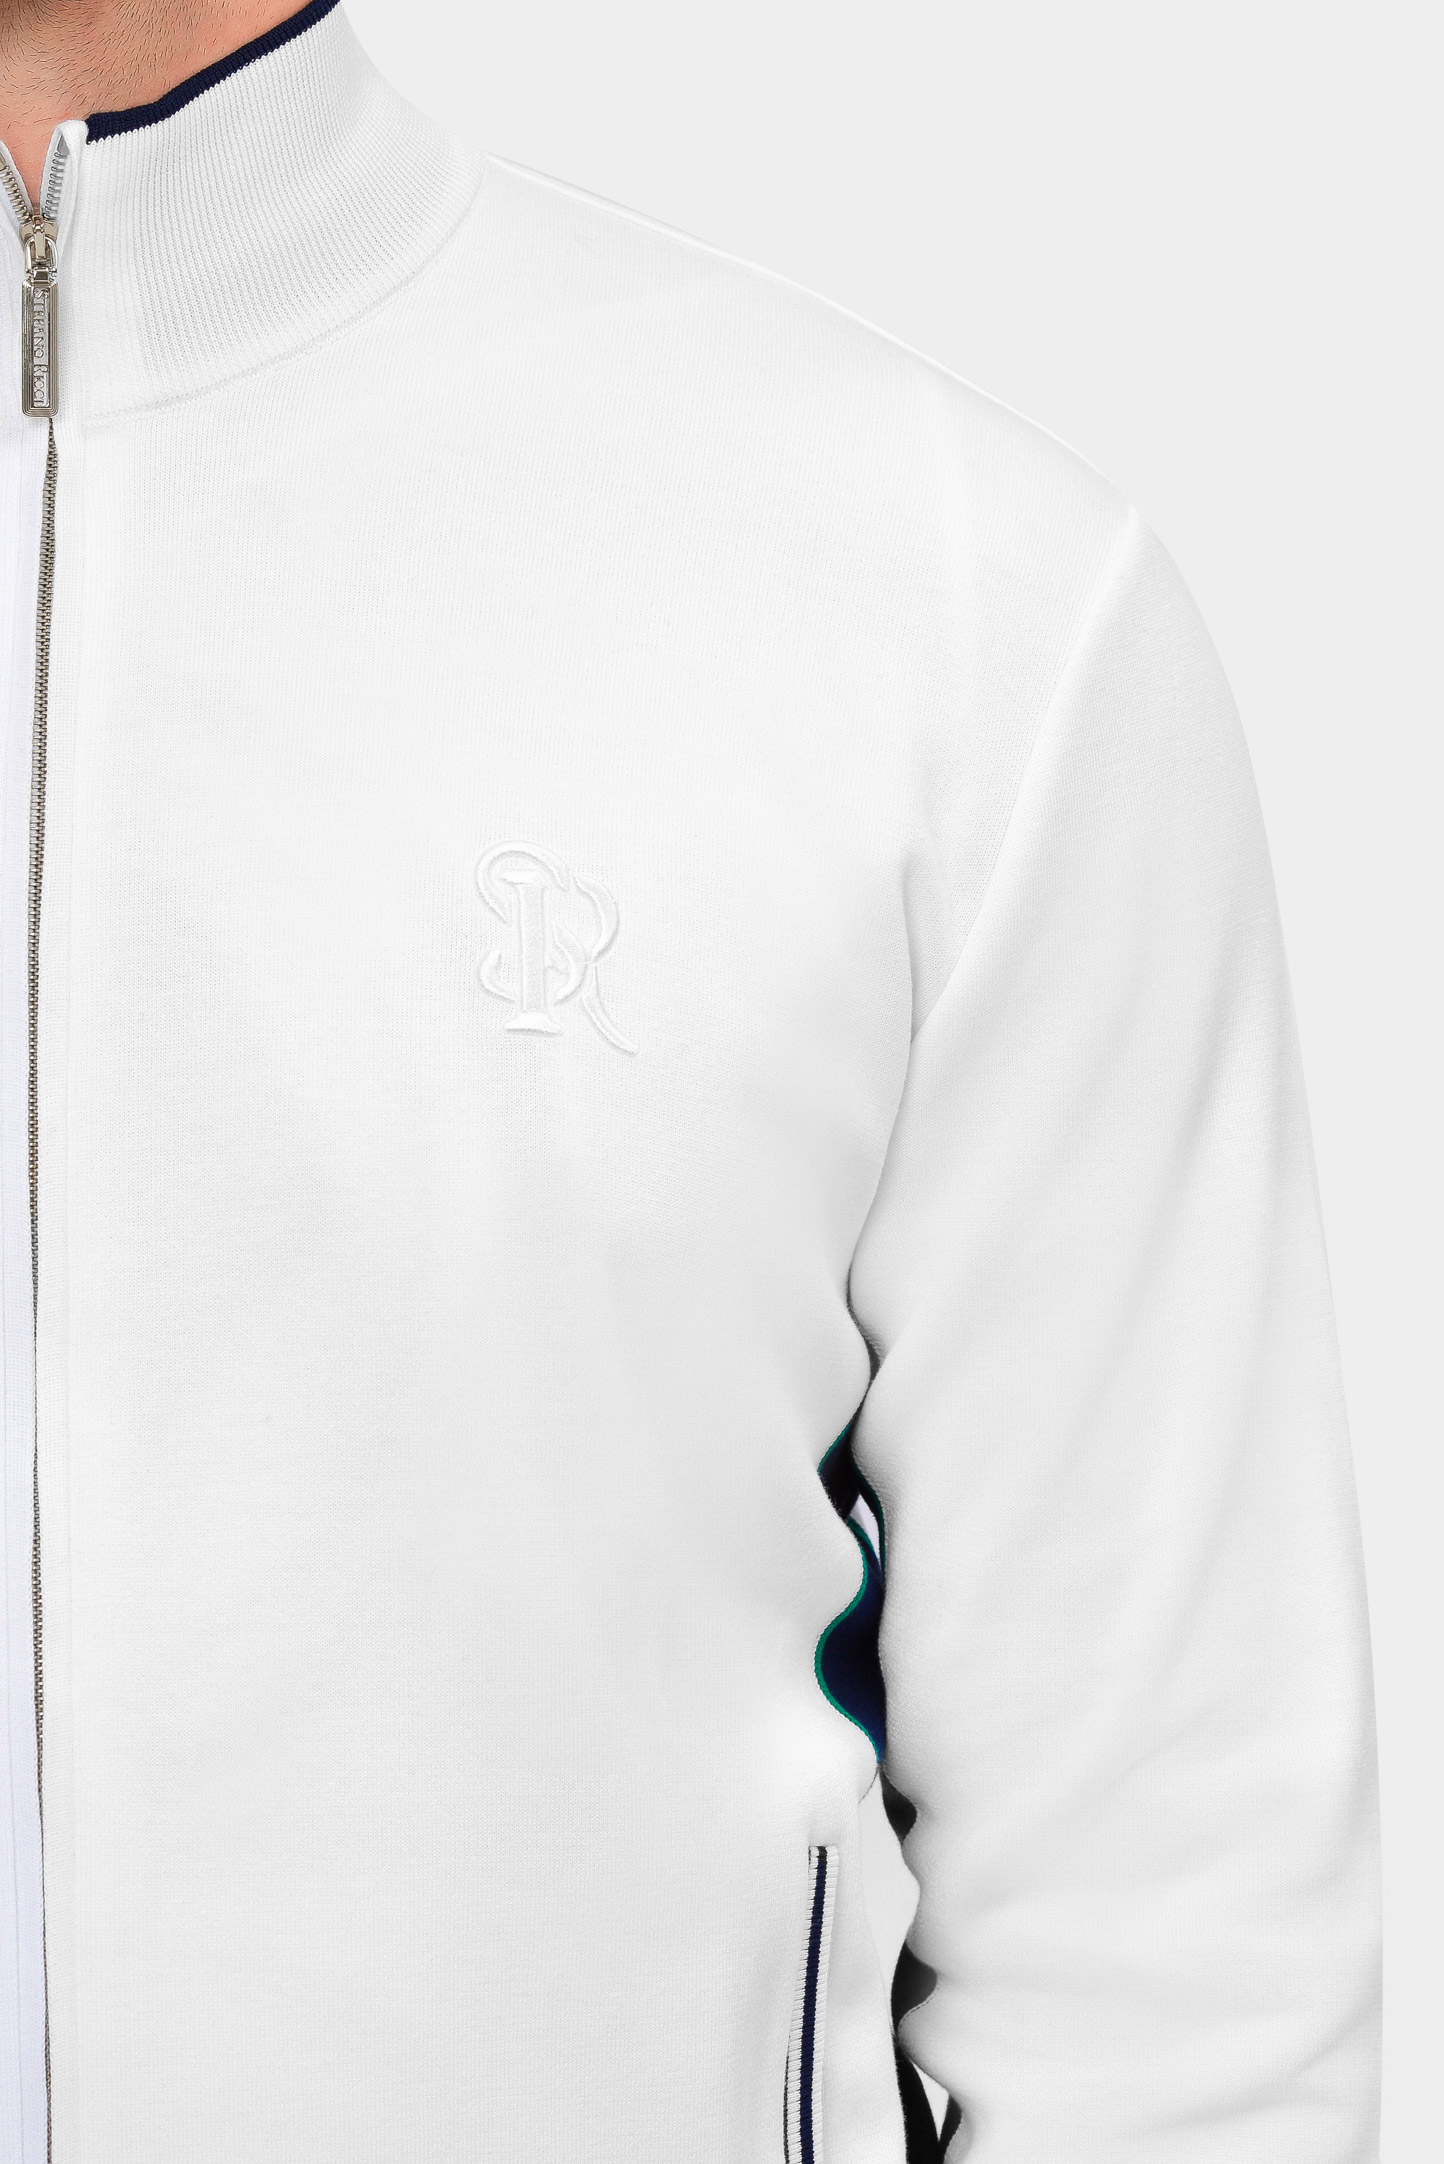 Куртка спорт STEFANO RICCI K616152R31 F20114, цвет: Белый, Мужской